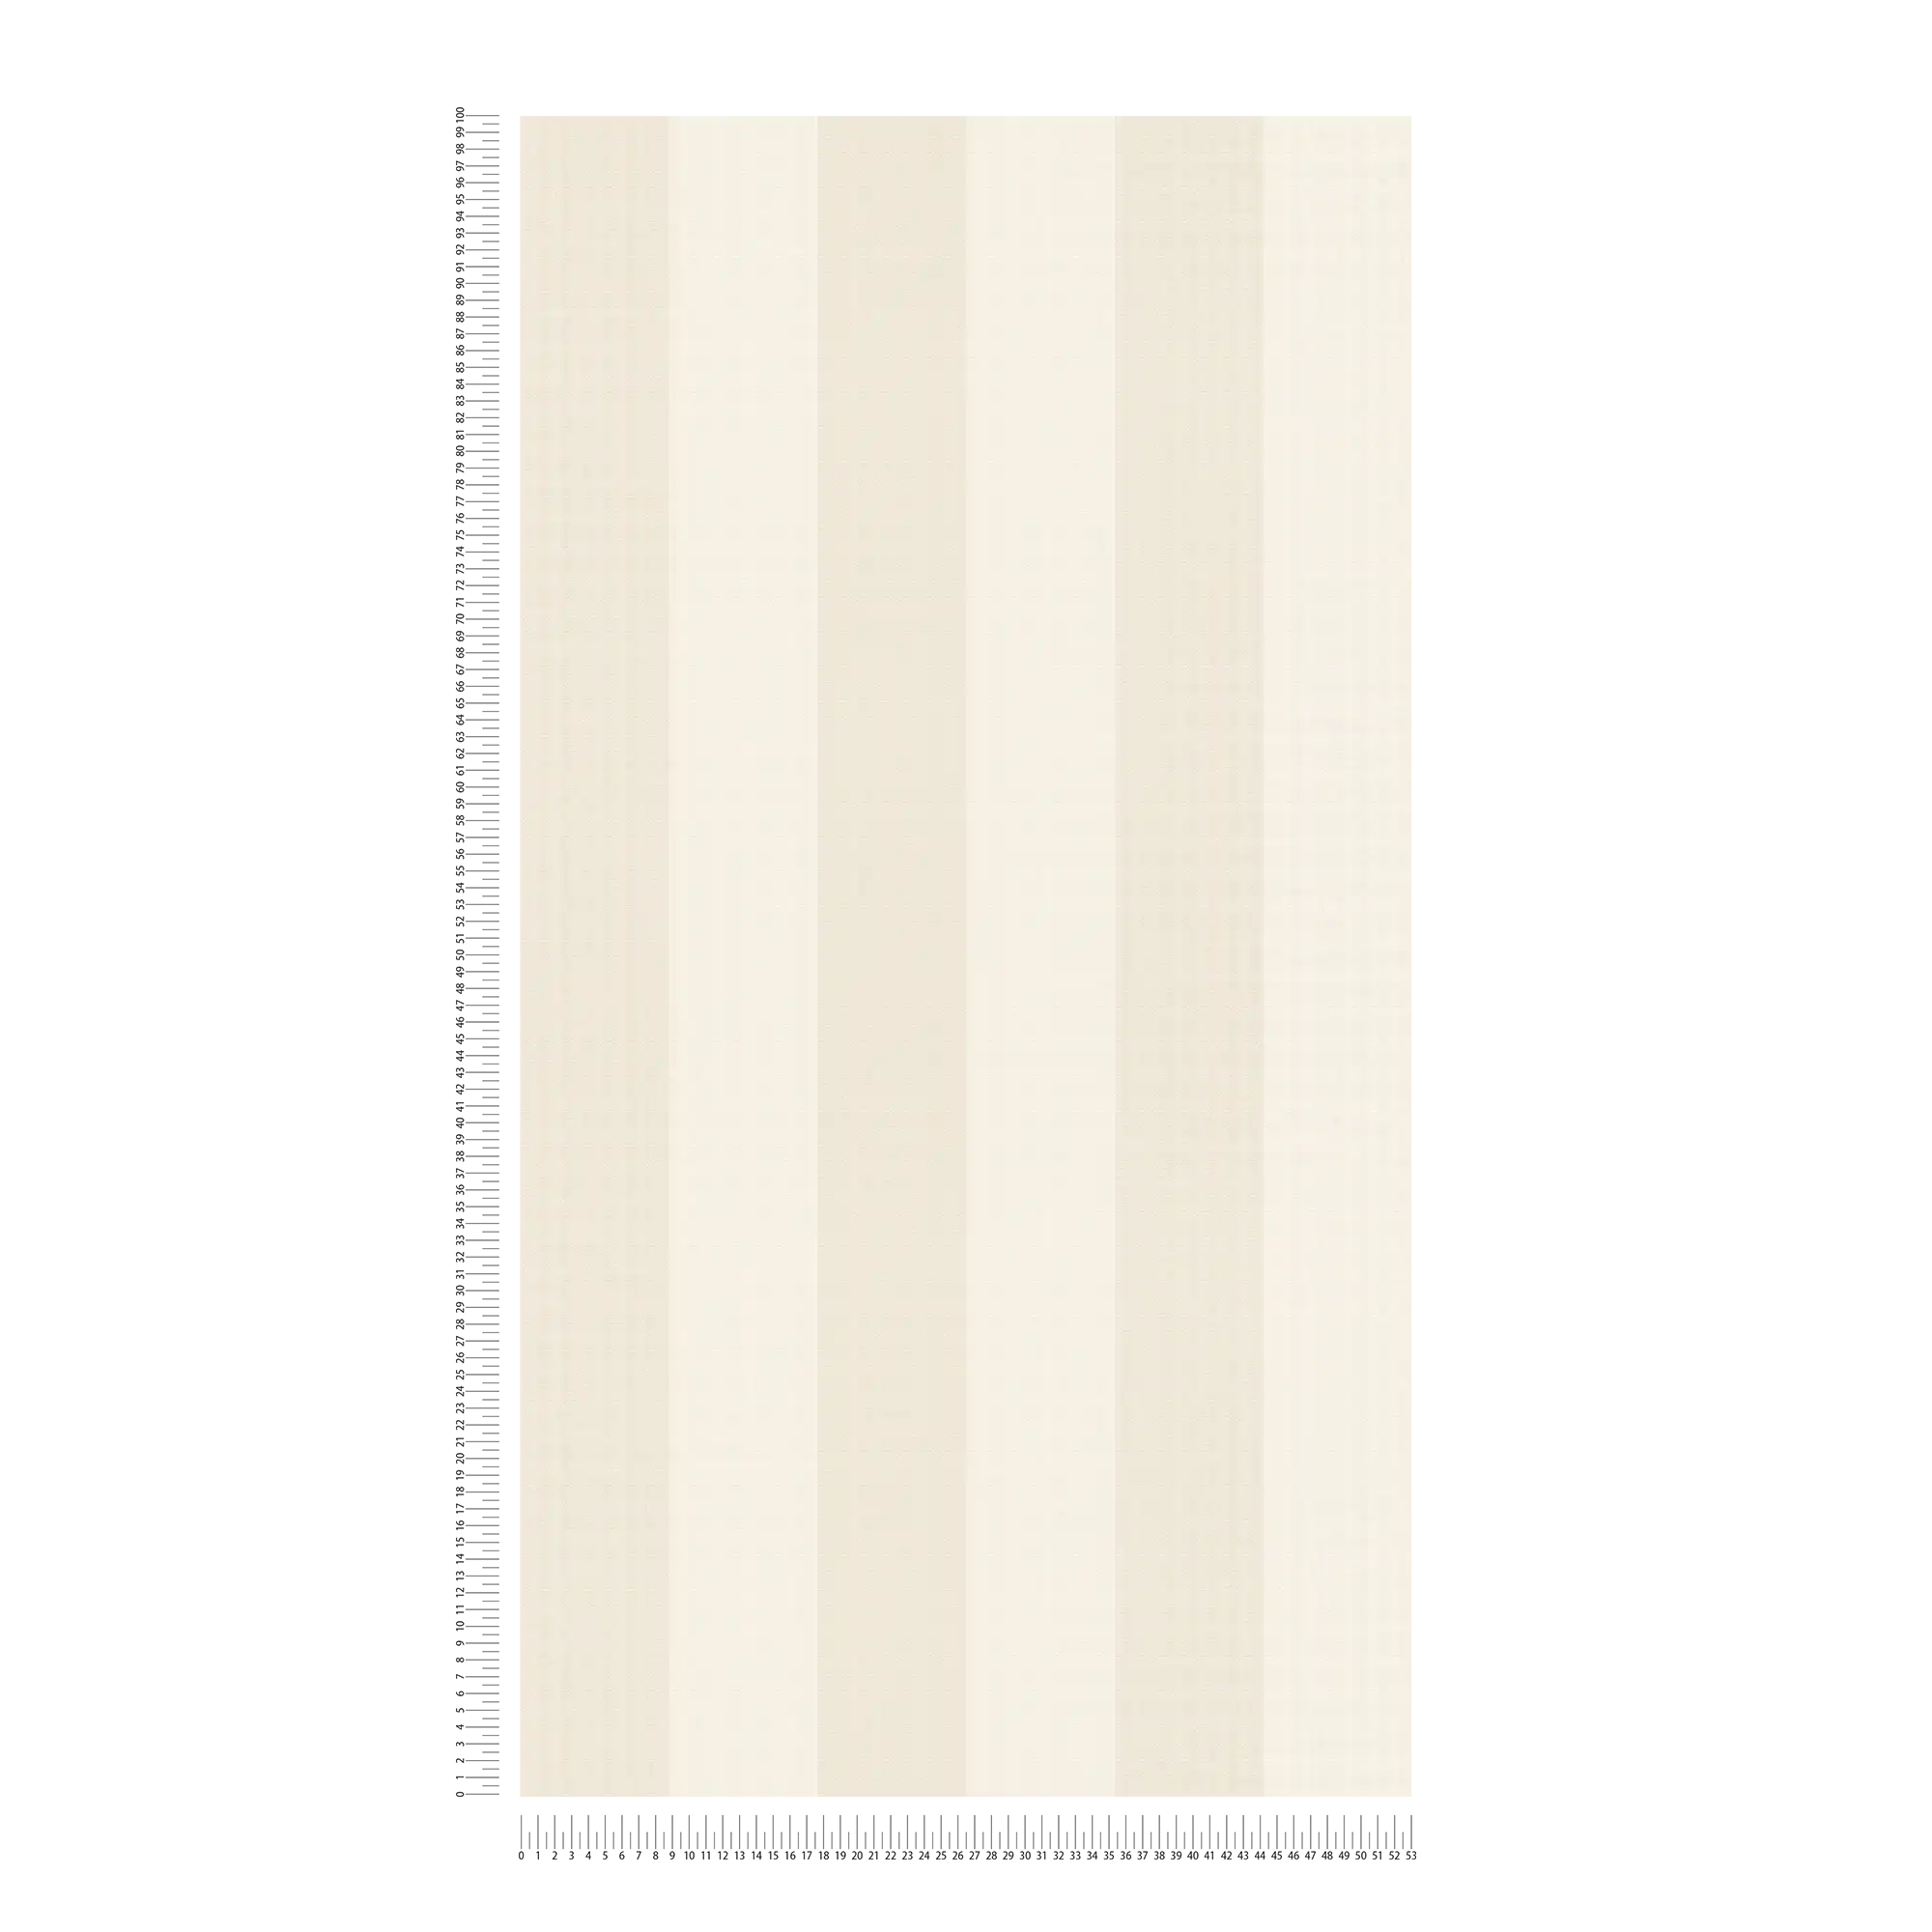             Papel pintado Karl LAGERFELD diseño de rayas - crema
        